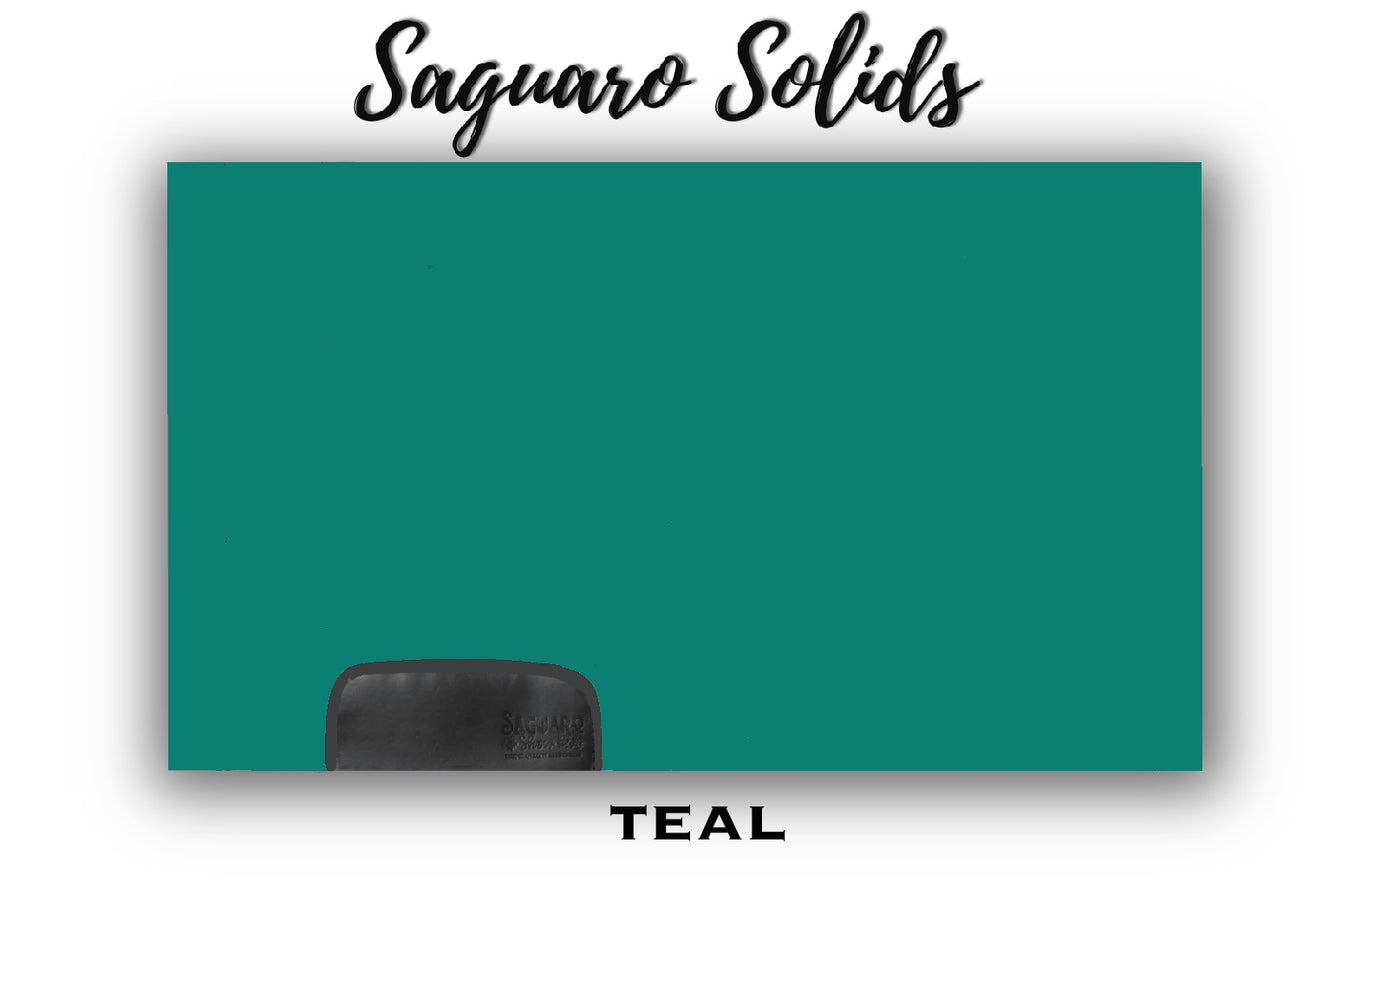 Saguaro Solid "Teal" Show Pad (SEMI-CUSTOM)